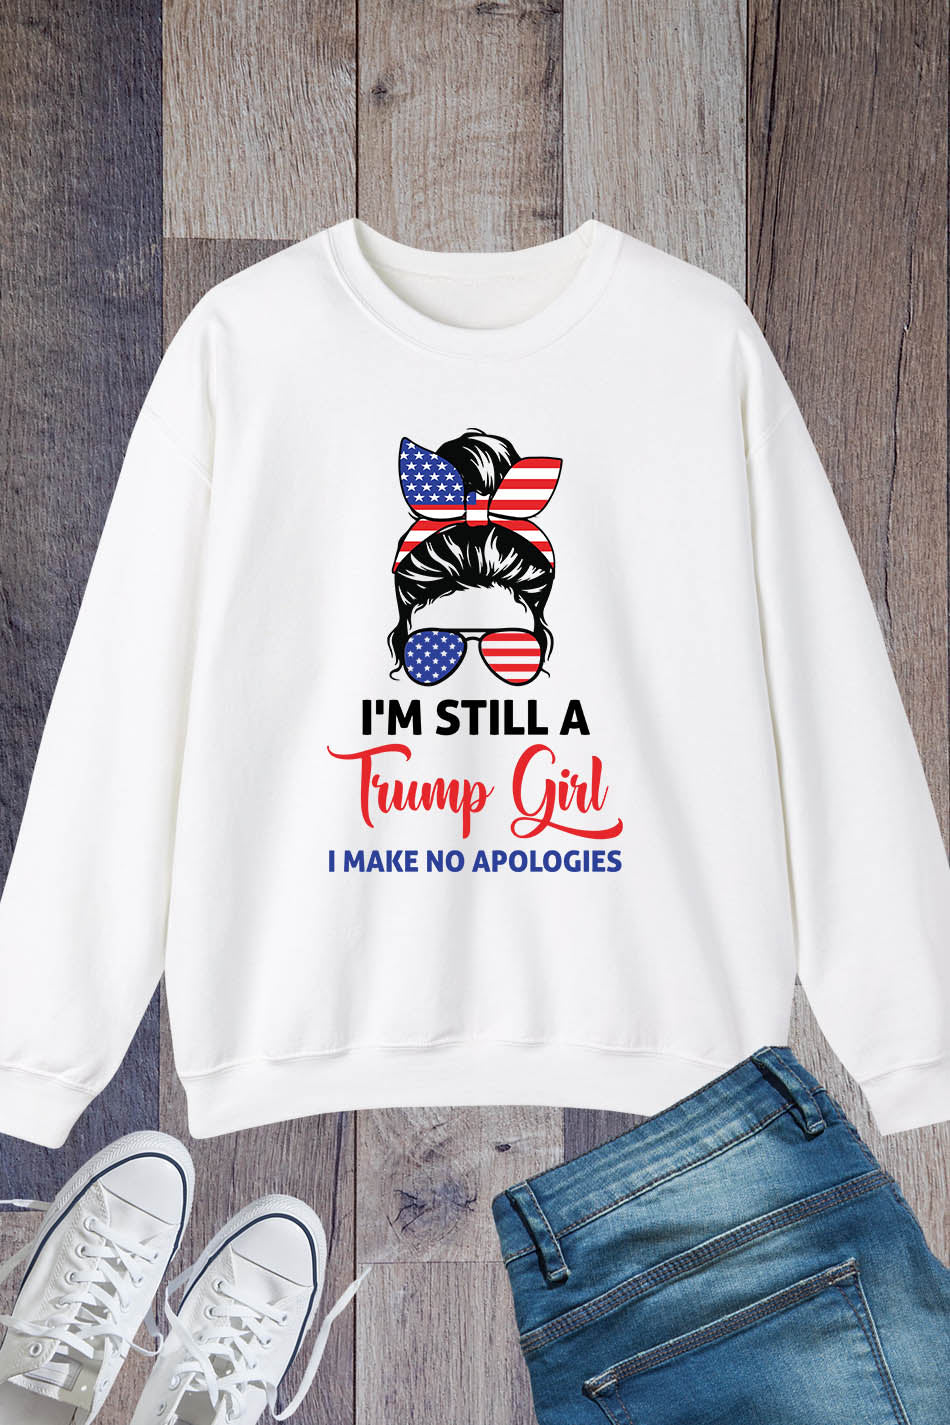 I'm Still a Trump Girl Sweatshirt